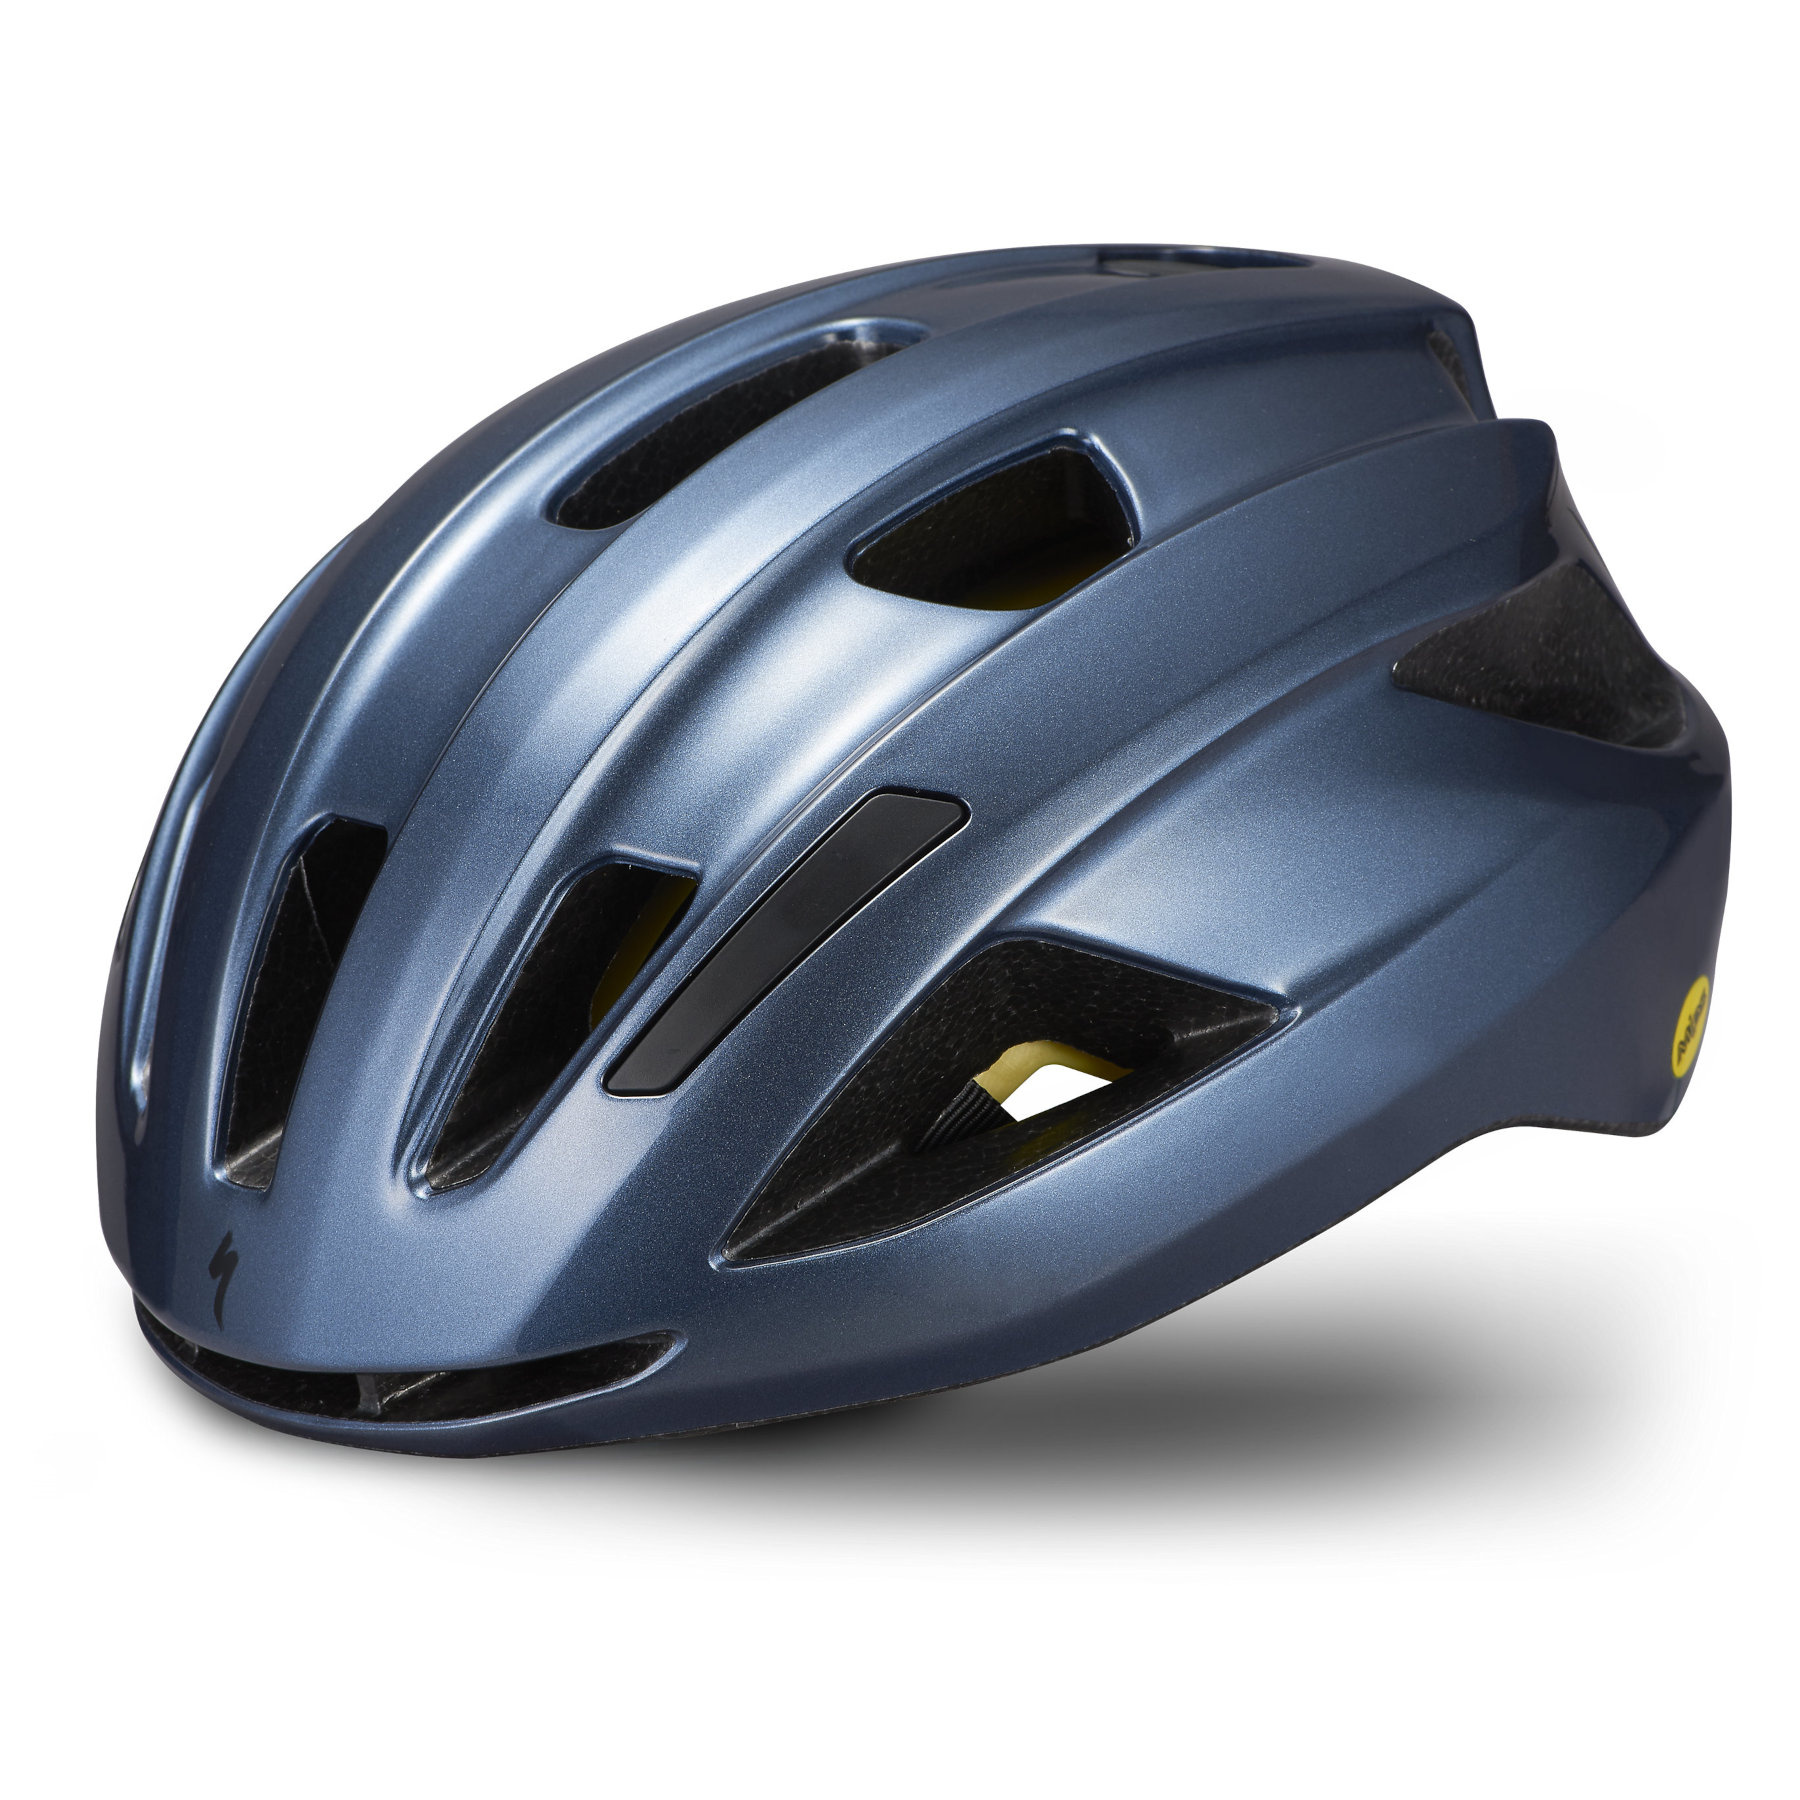 Produktbild von Specialized Align II MIPS Helm - Gloss Cast Blue Metallic/Black Reflective